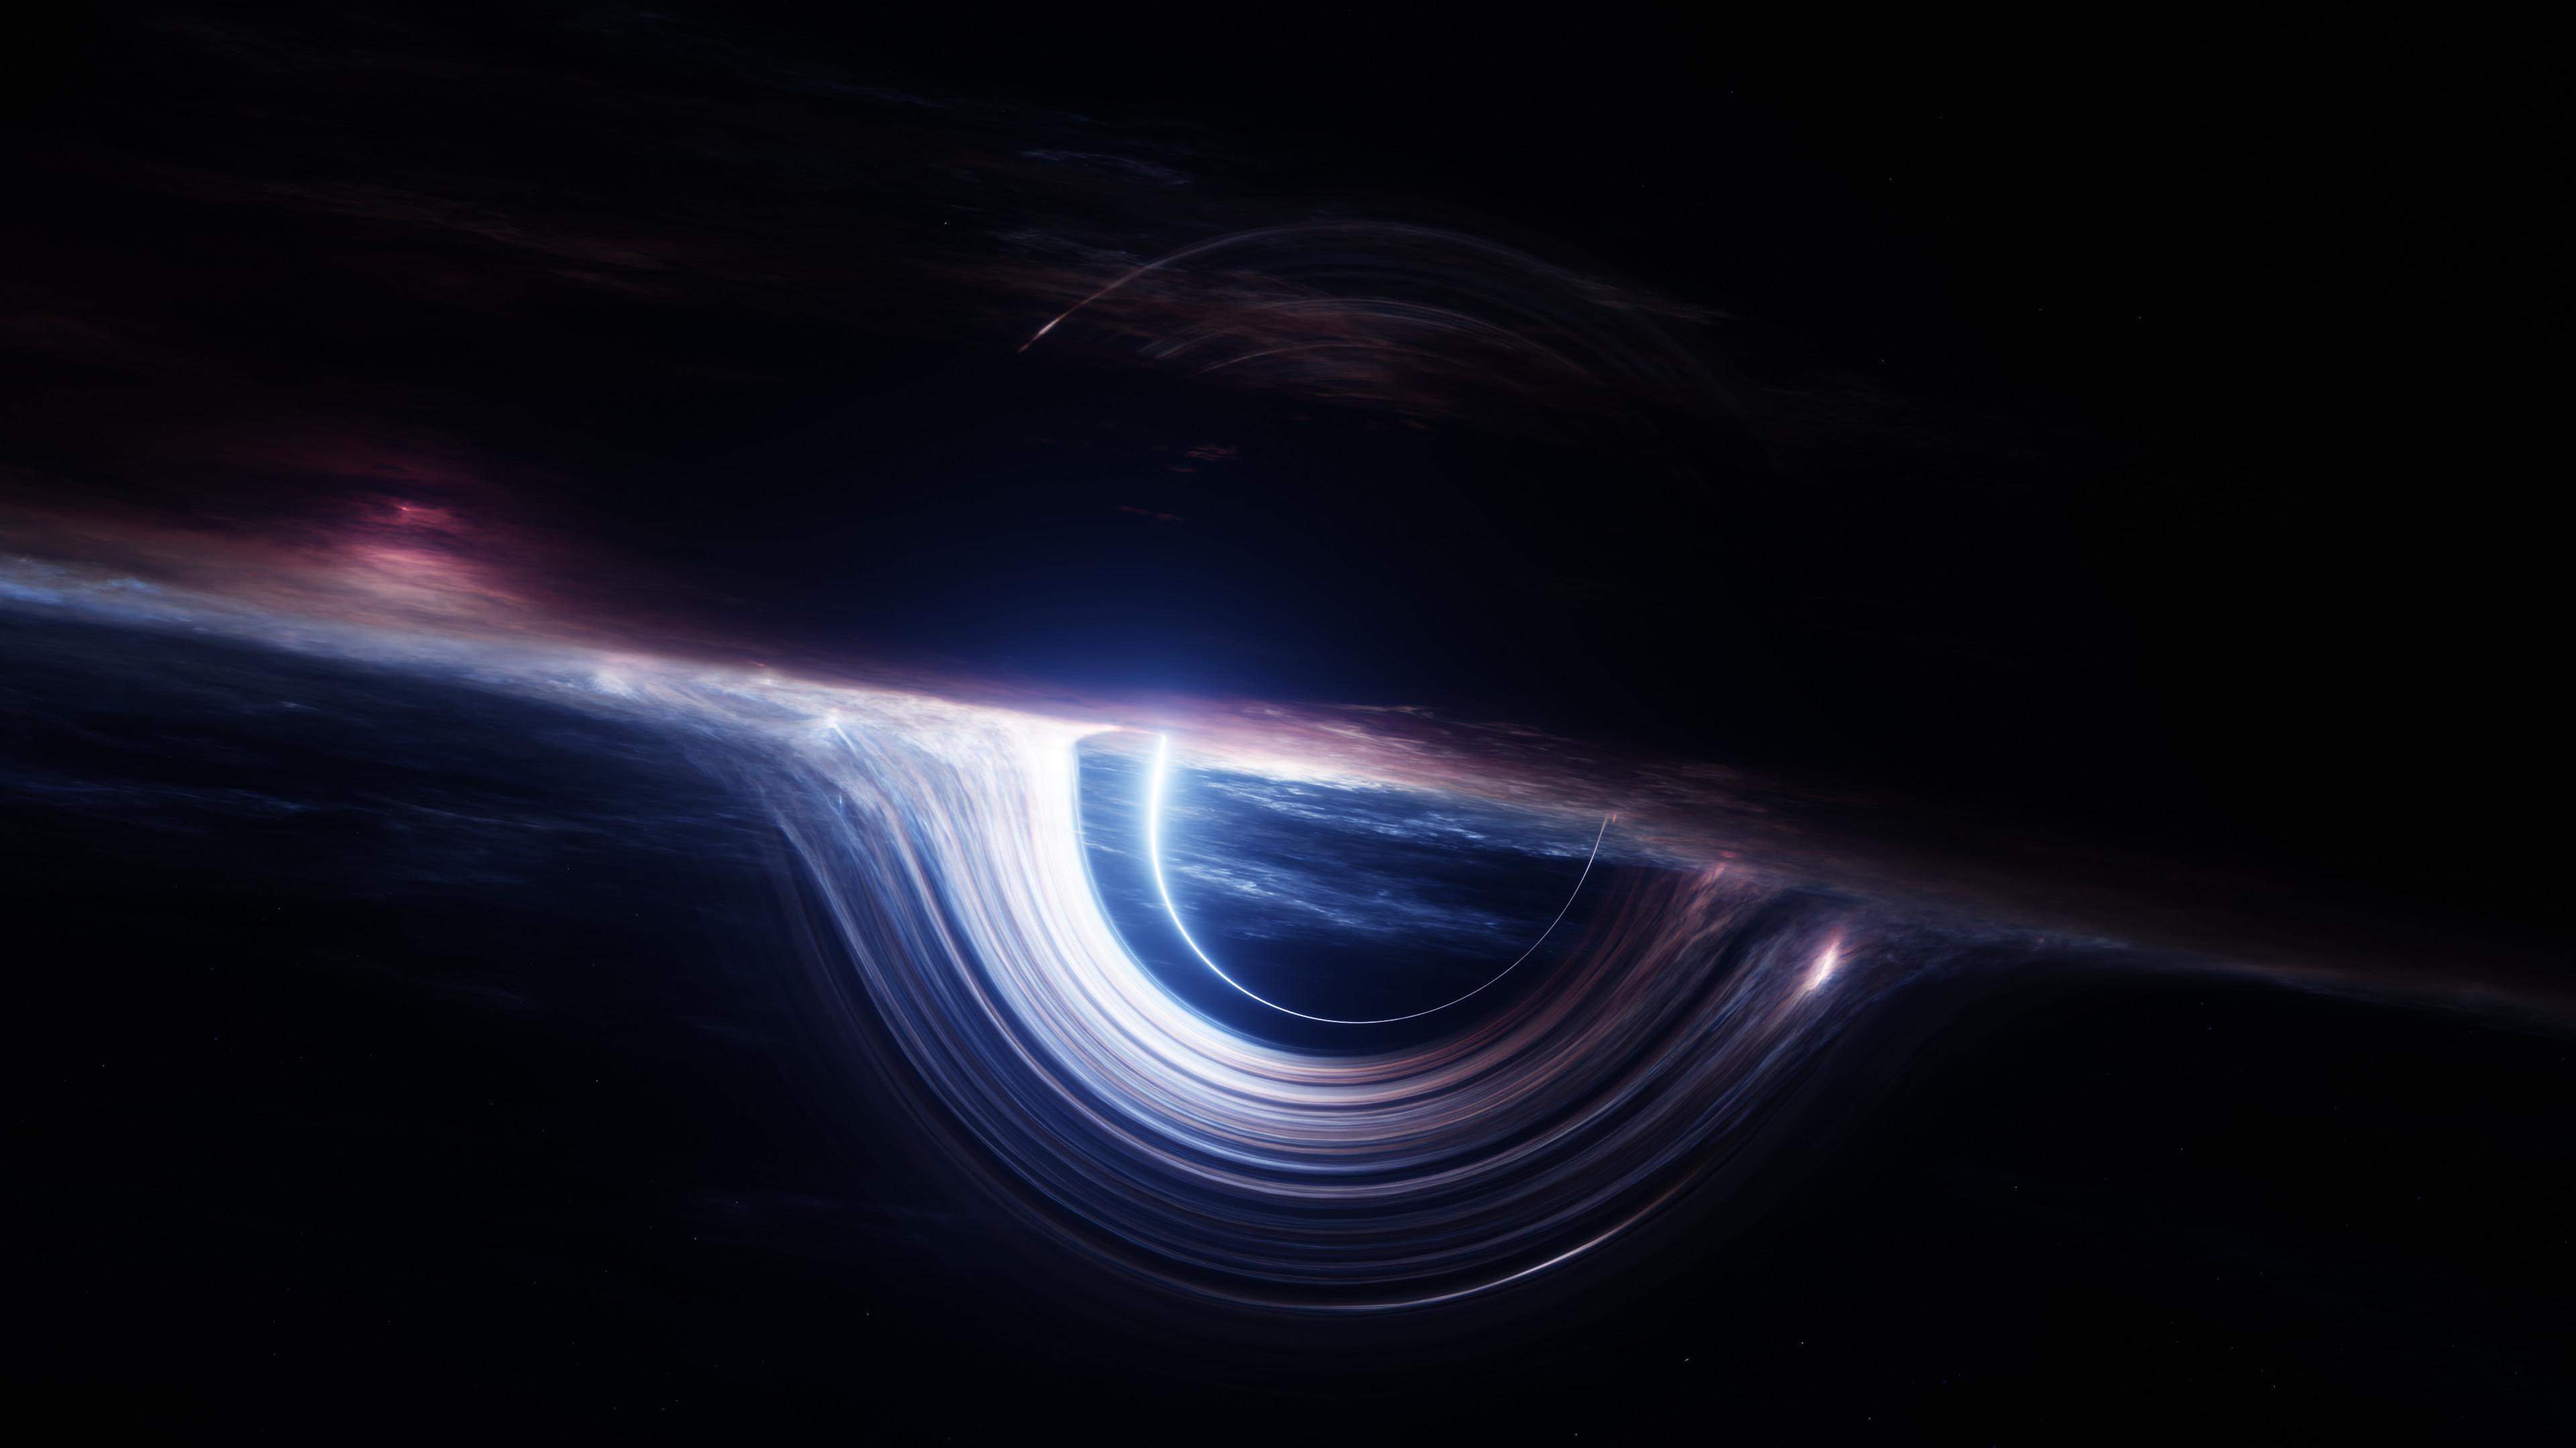 4k Sci Fi Black Hole Wallpaper Background Image